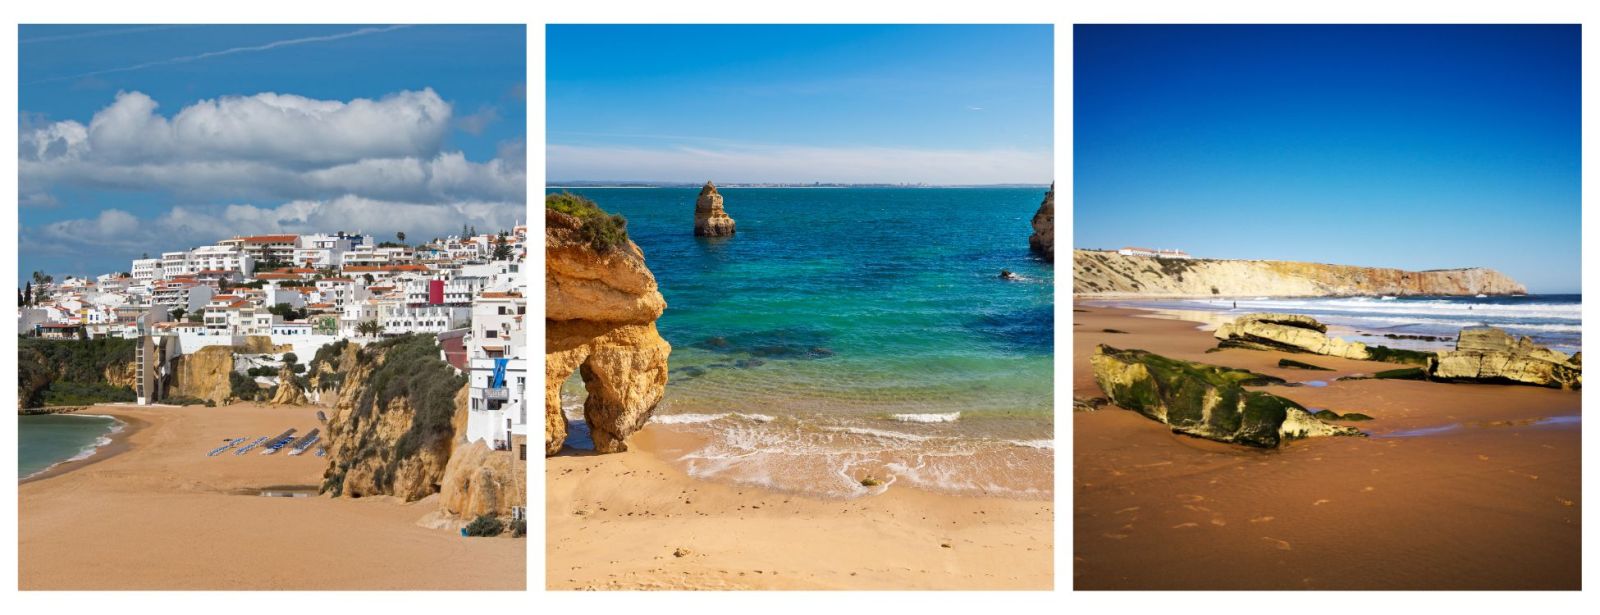 Algarve Beaches. Algarve Beach Guide